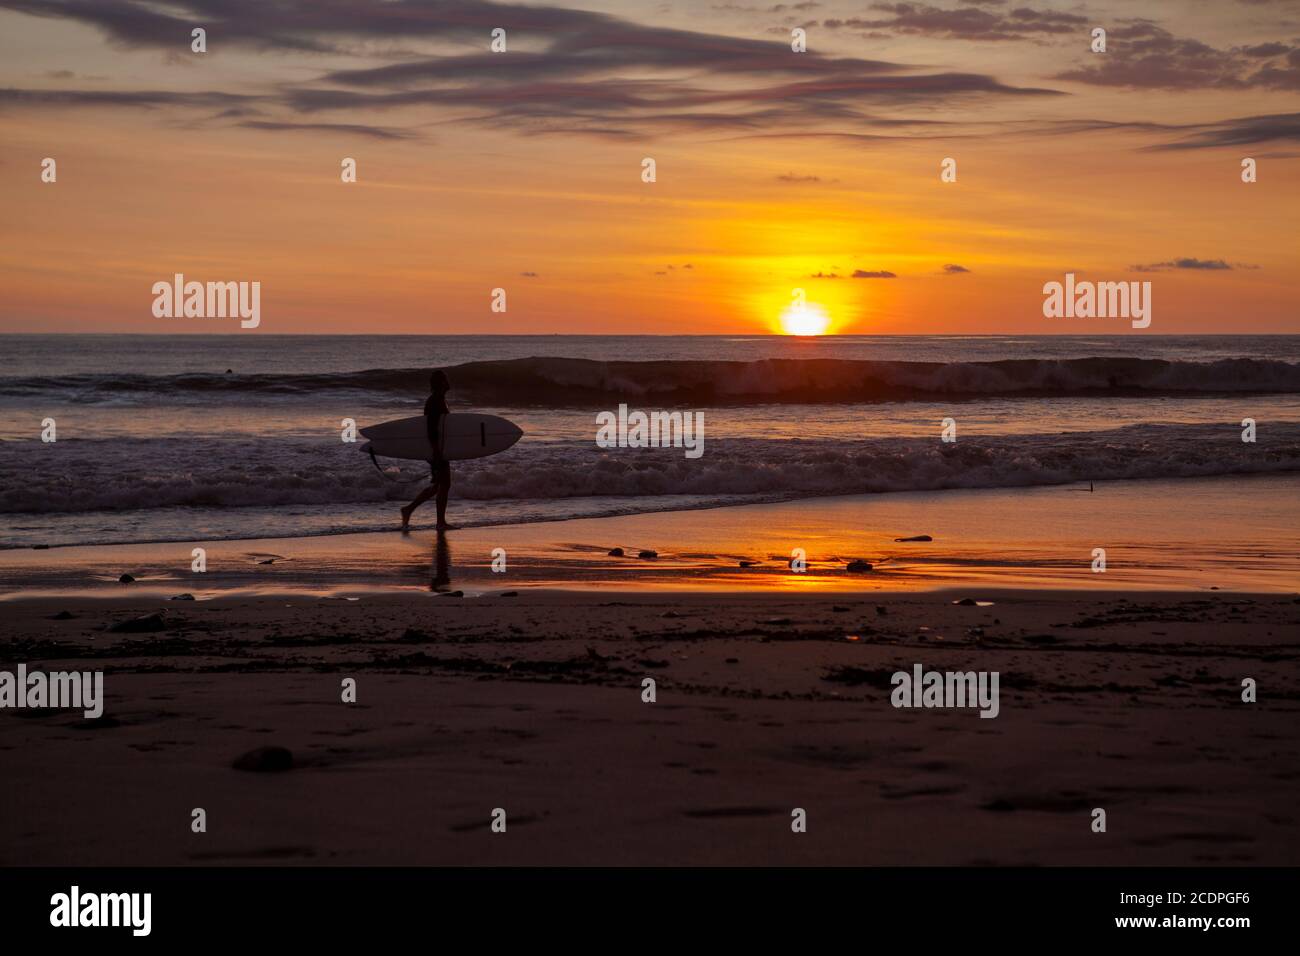 Surfers on the beach of Santa Teresa at sunset / Costa Rica Stock Photo